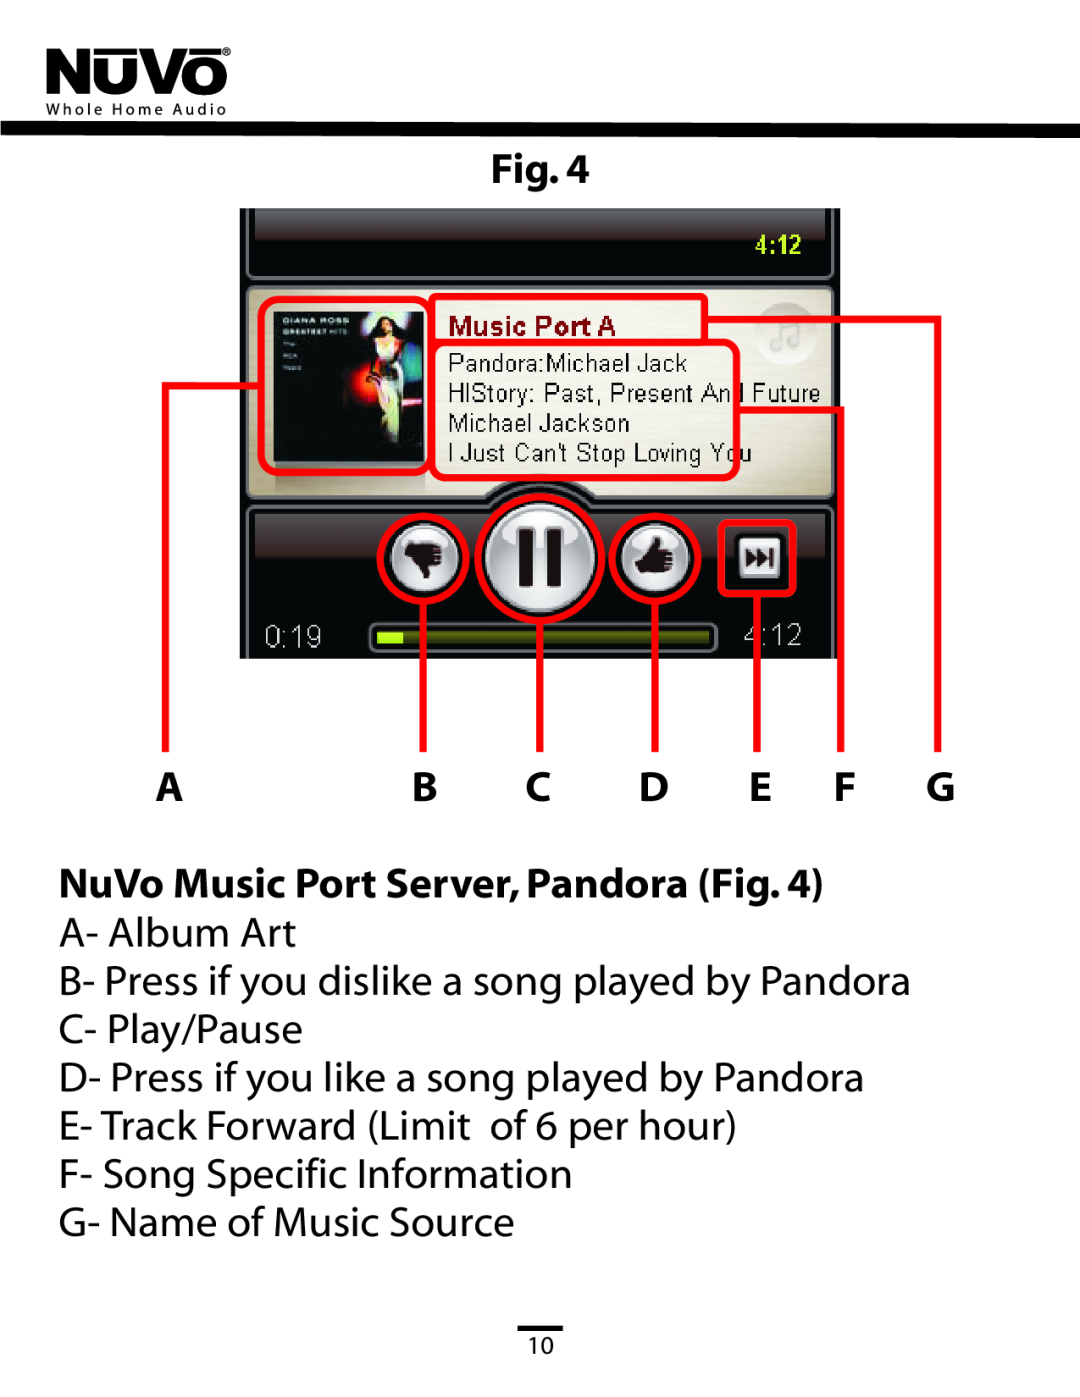 Nuvo NV-CTP36 manual Fig. AB C D E F G, NuVo Music Port Server, Pandora Fig, A- Album Art, F- Song Specific Information 